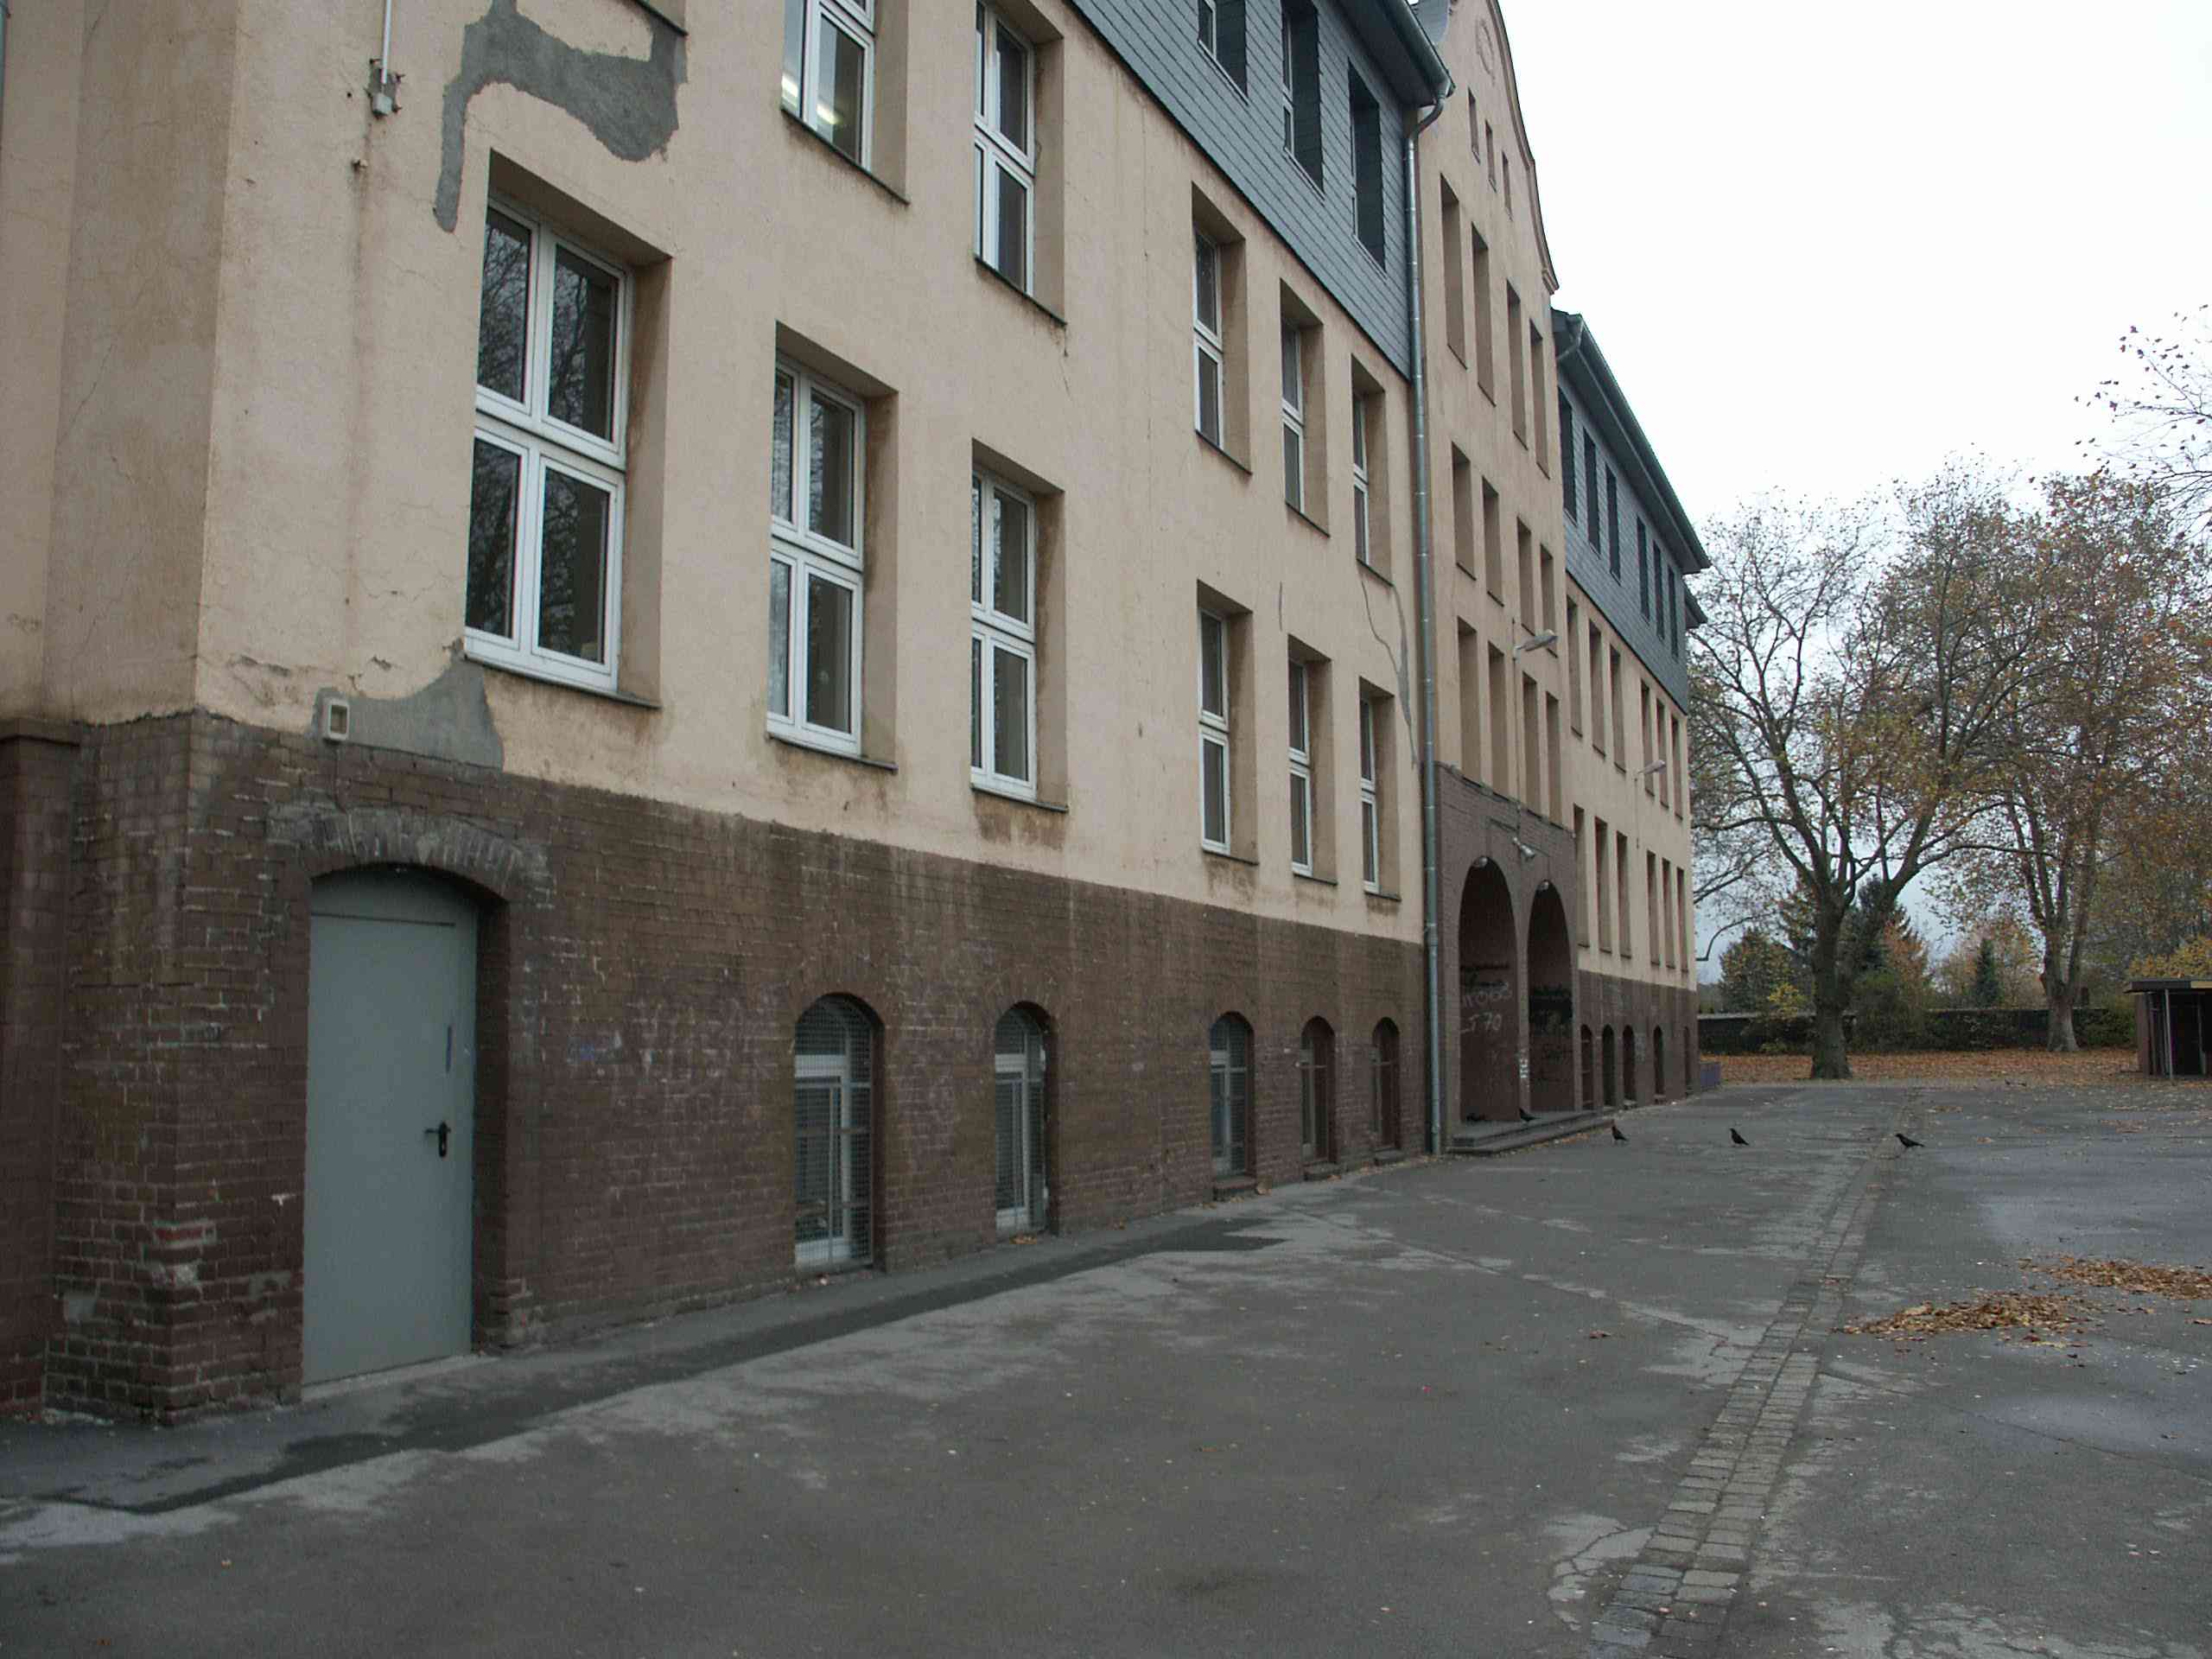 Realschule Kalthoffstraße